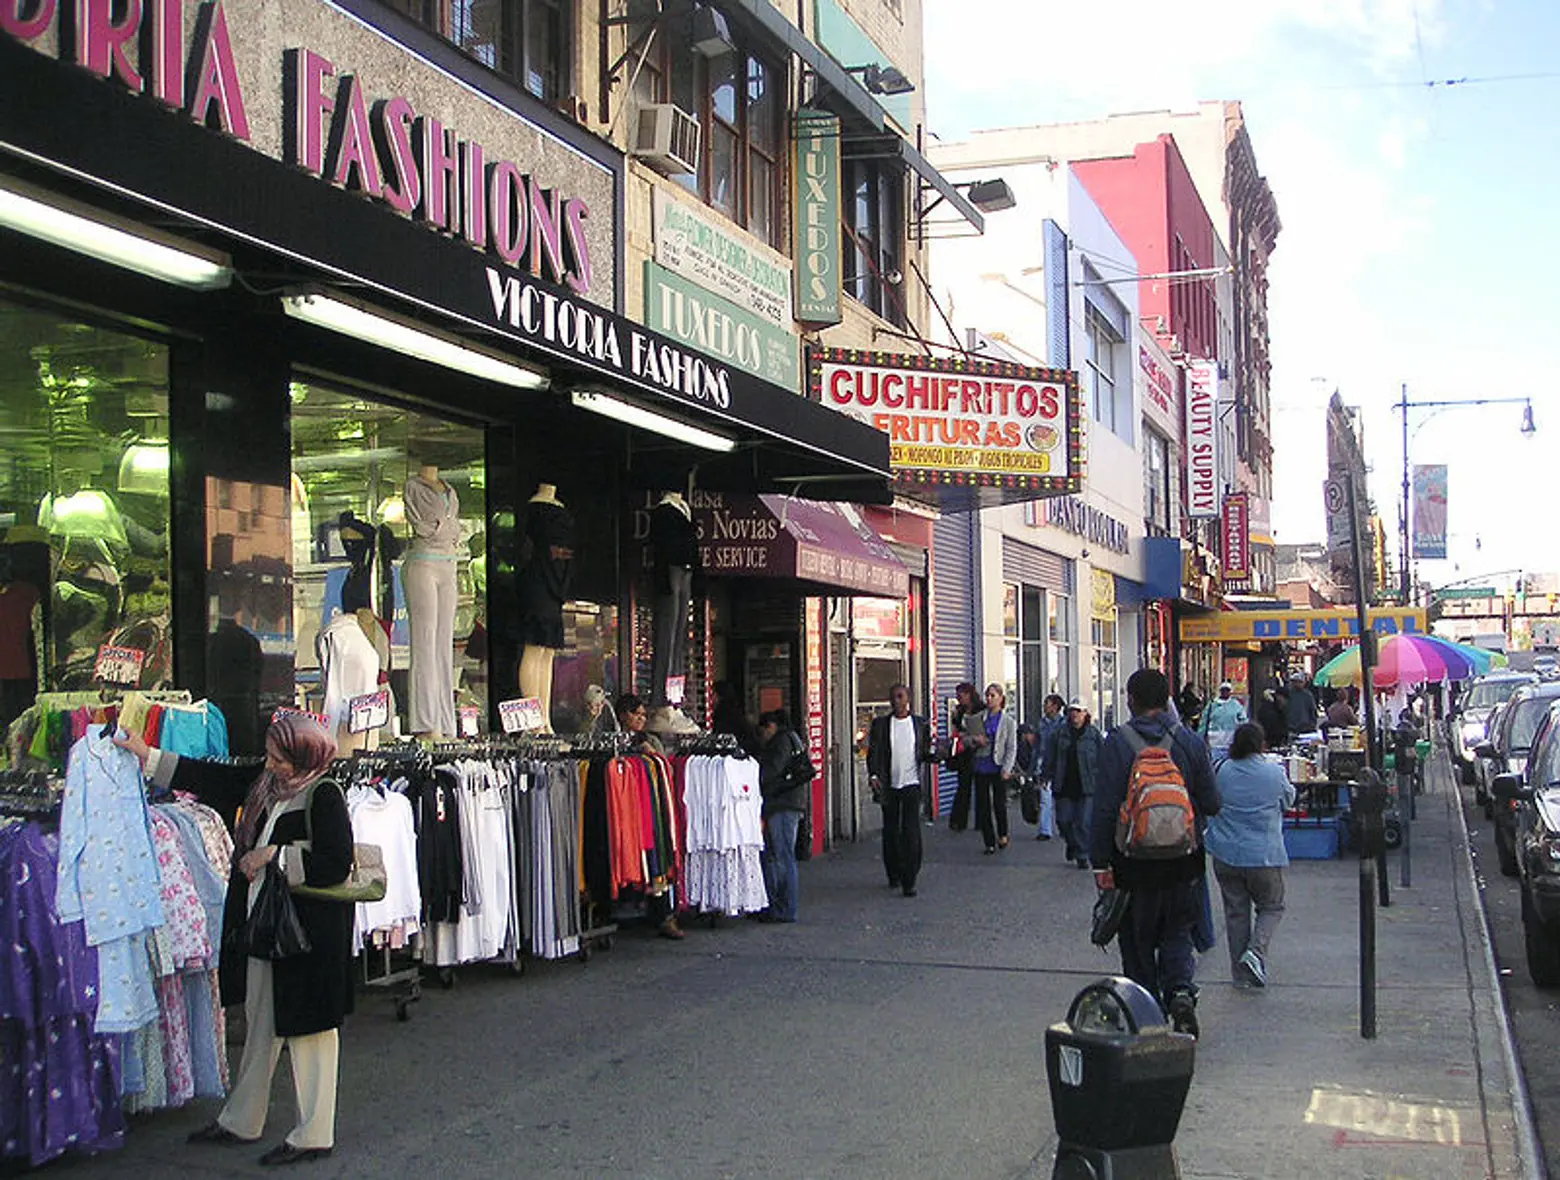 City Planning Commission approves East Harlem rezoning plan